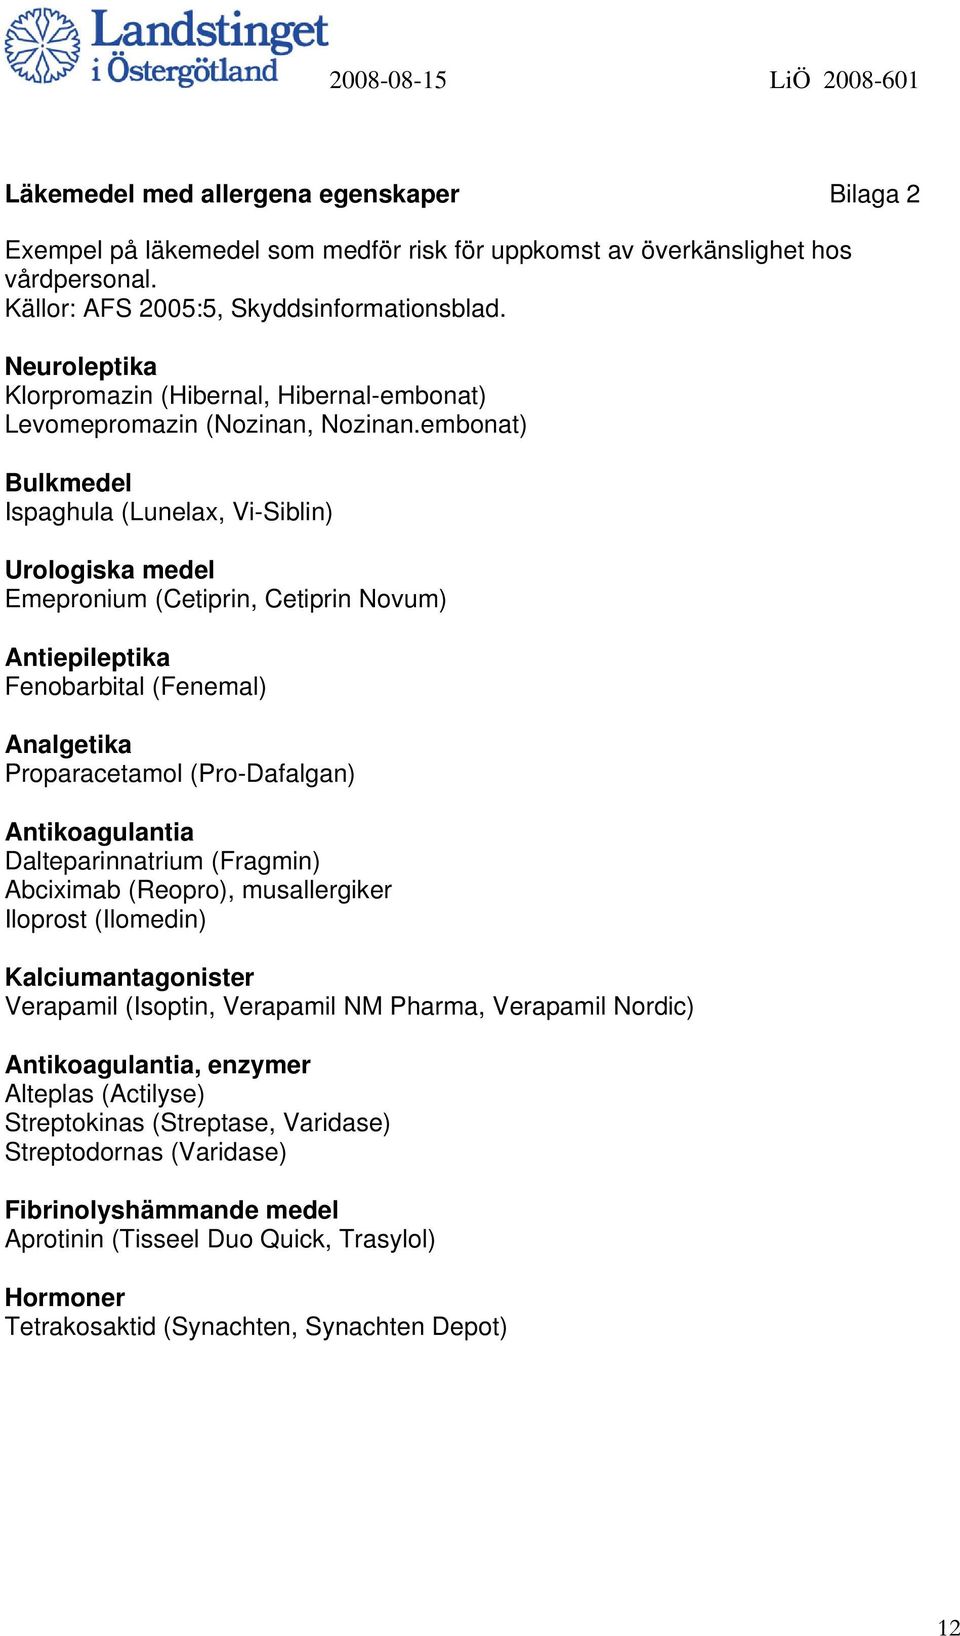 embonat) Bulkmedel Ispaghula (Lunelax, Vi-Siblin) Urologiska medel Emepronium (Cetiprin, Cetiprin Novum) Antiepileptika Fenobarbital (Fenemal) Analgetika Proparacetamol (Pro-Dafalgan) Antikoagulantia